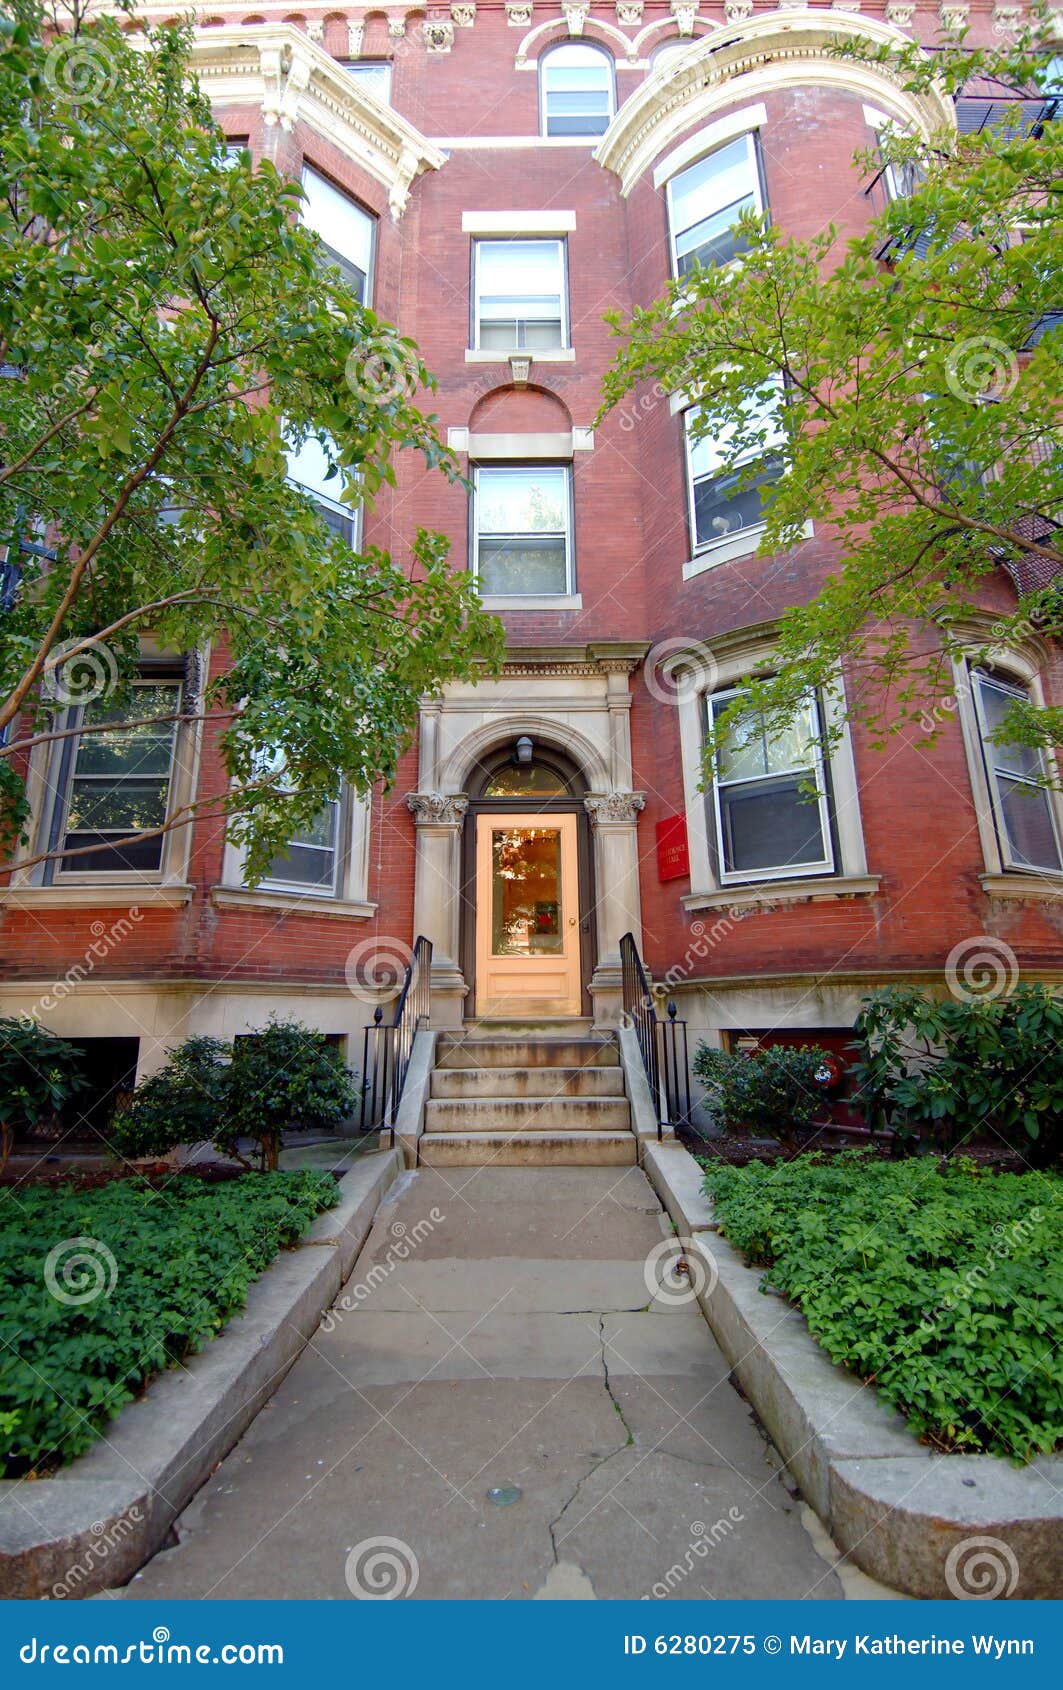 residence entrance at boston university